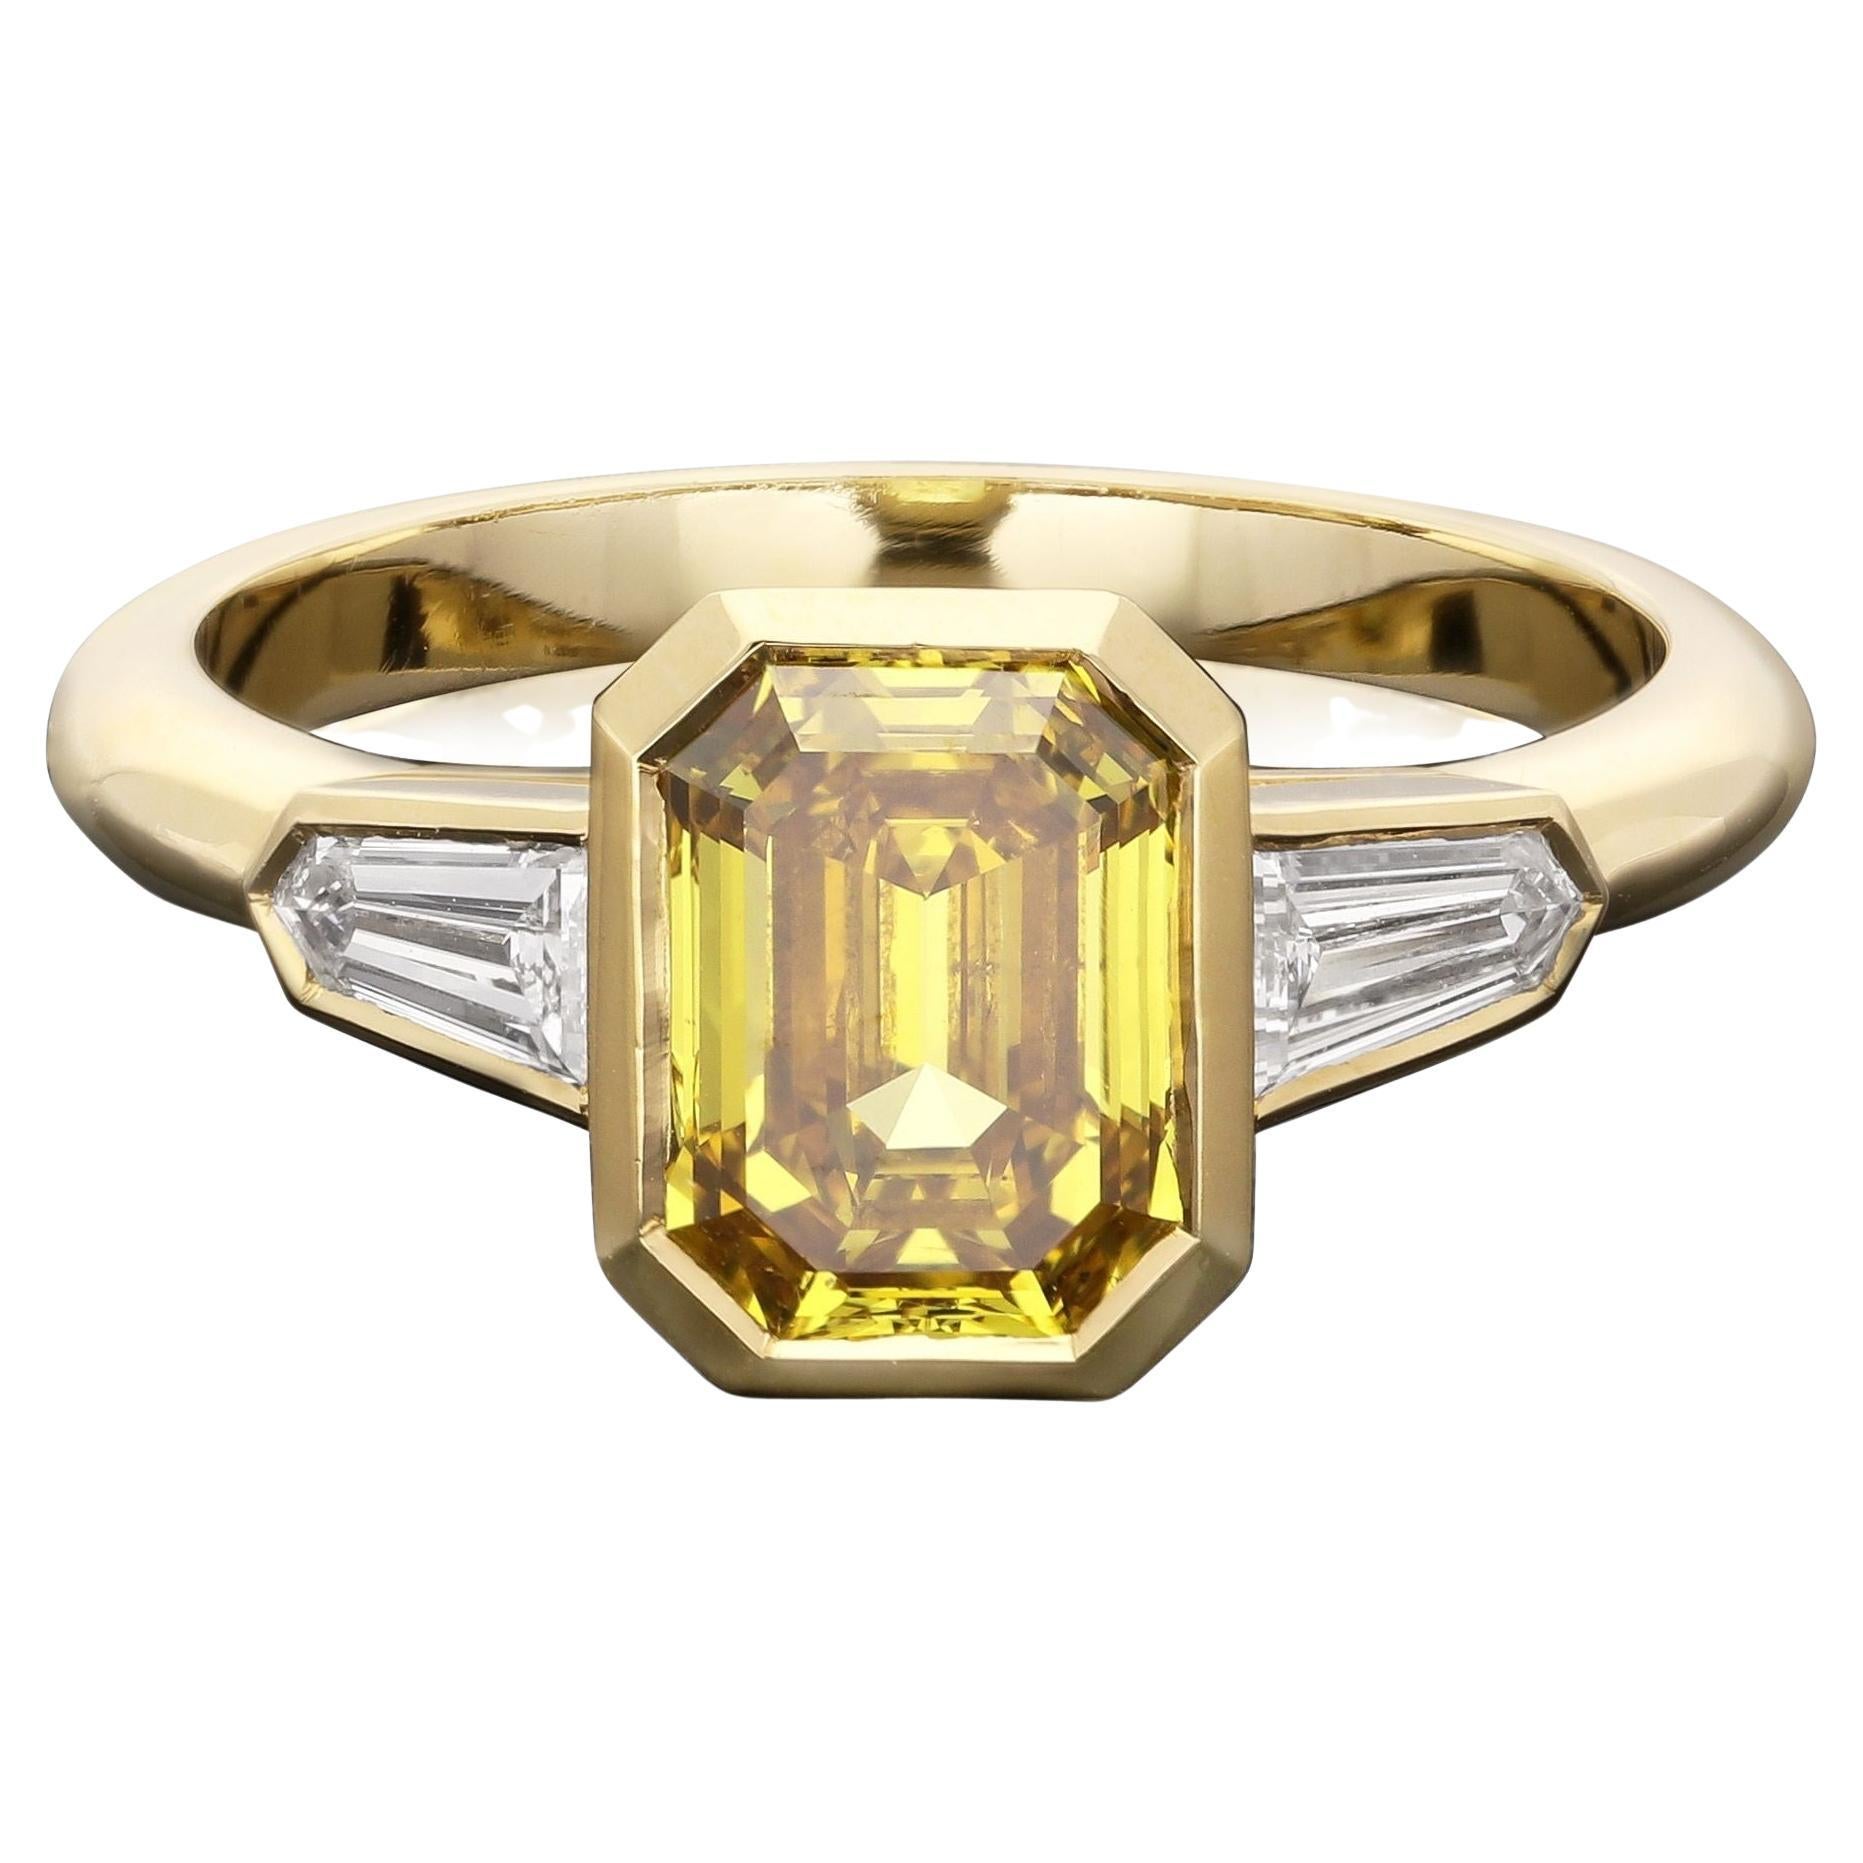 Hancocks 1.52ct Fancy Deep Yellow Diamond Ring with White Diamond Shoulders For Sale